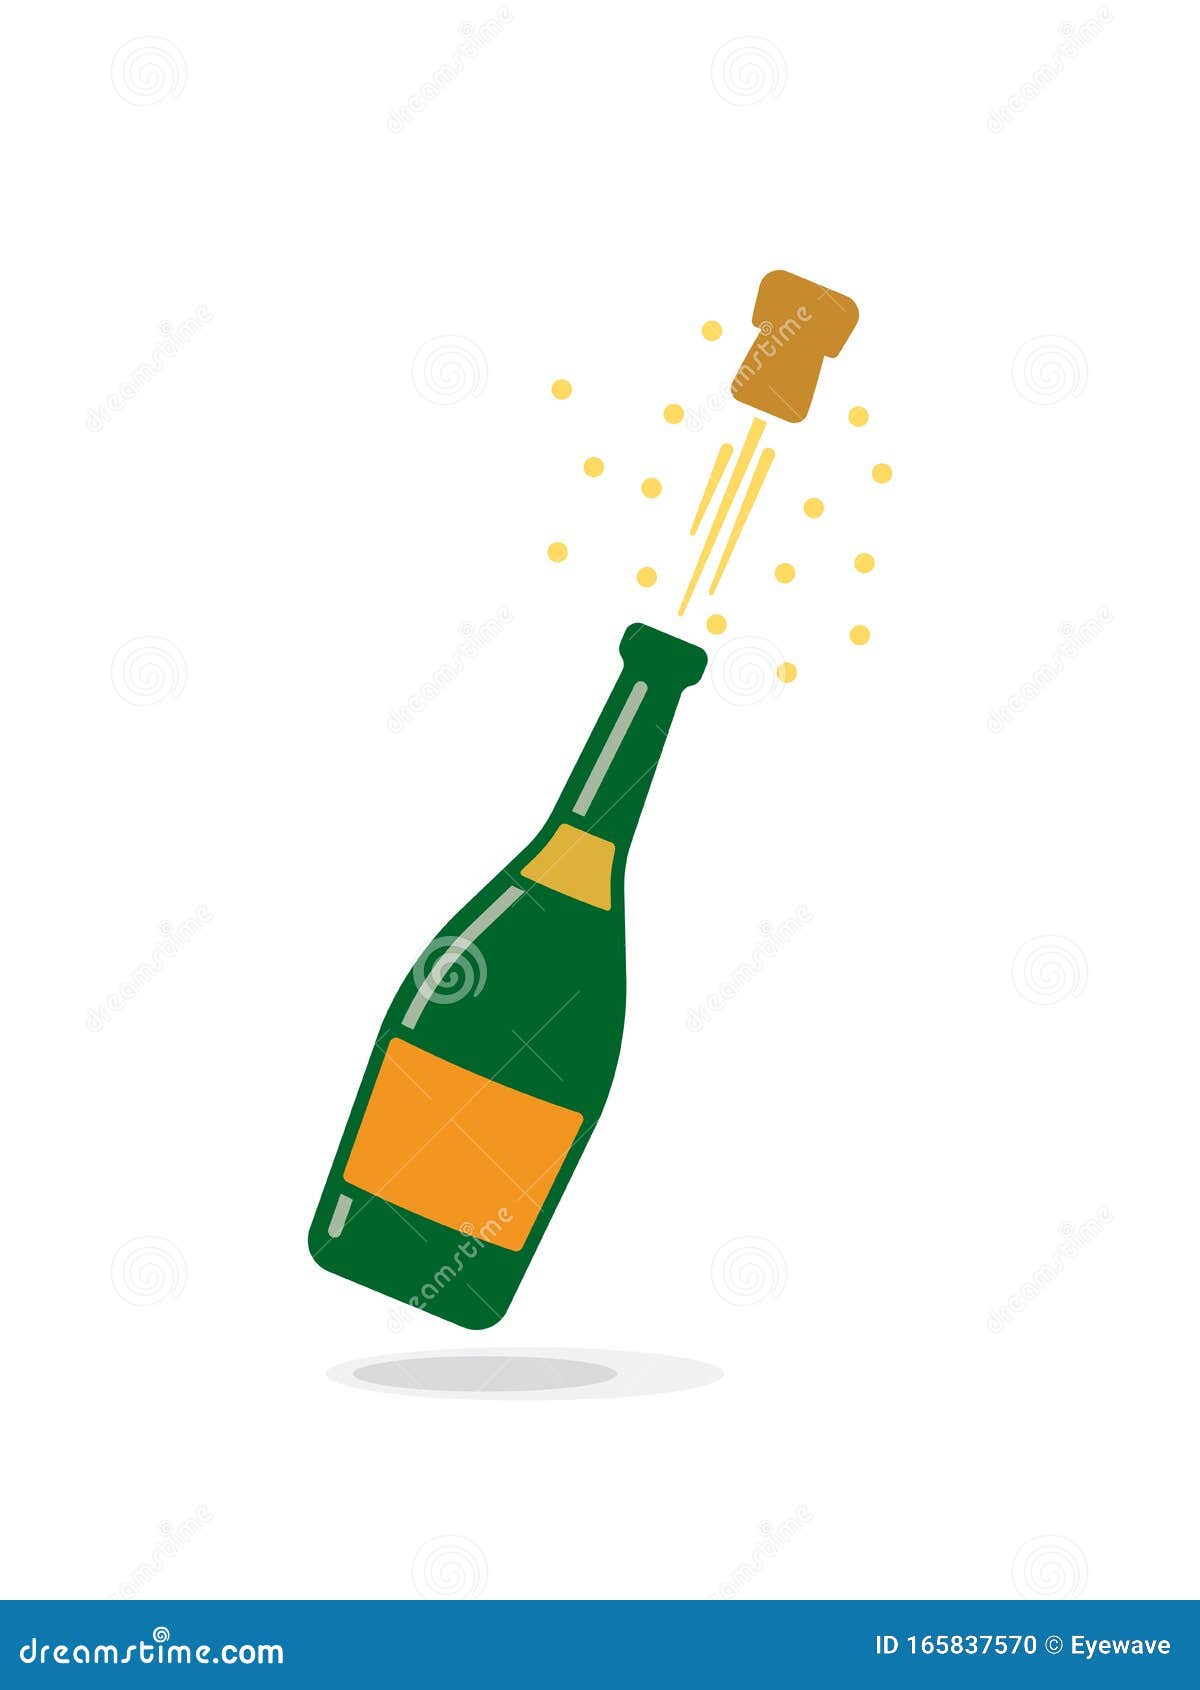 https://thumbs.dreamstime.com/z/popping-champagne-bottle-cartoon-vector-isolated-illustration-165837570.jpg